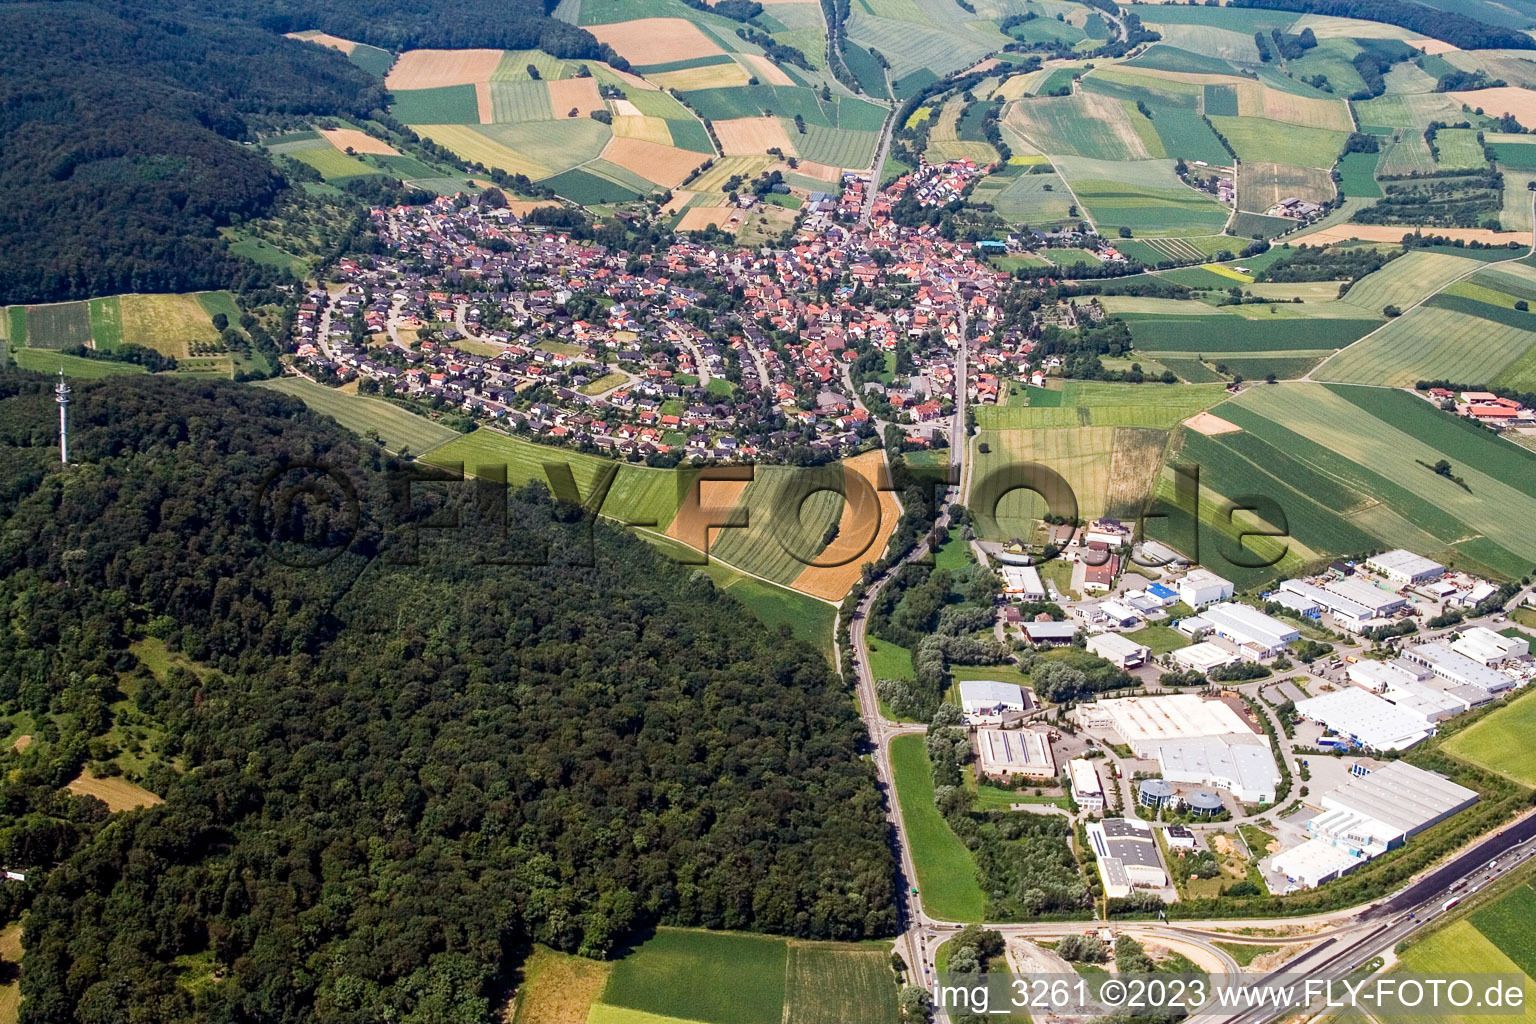 Aerial view of District Dühren in Sinsheim in the state Baden-Wuerttemberg, Germany